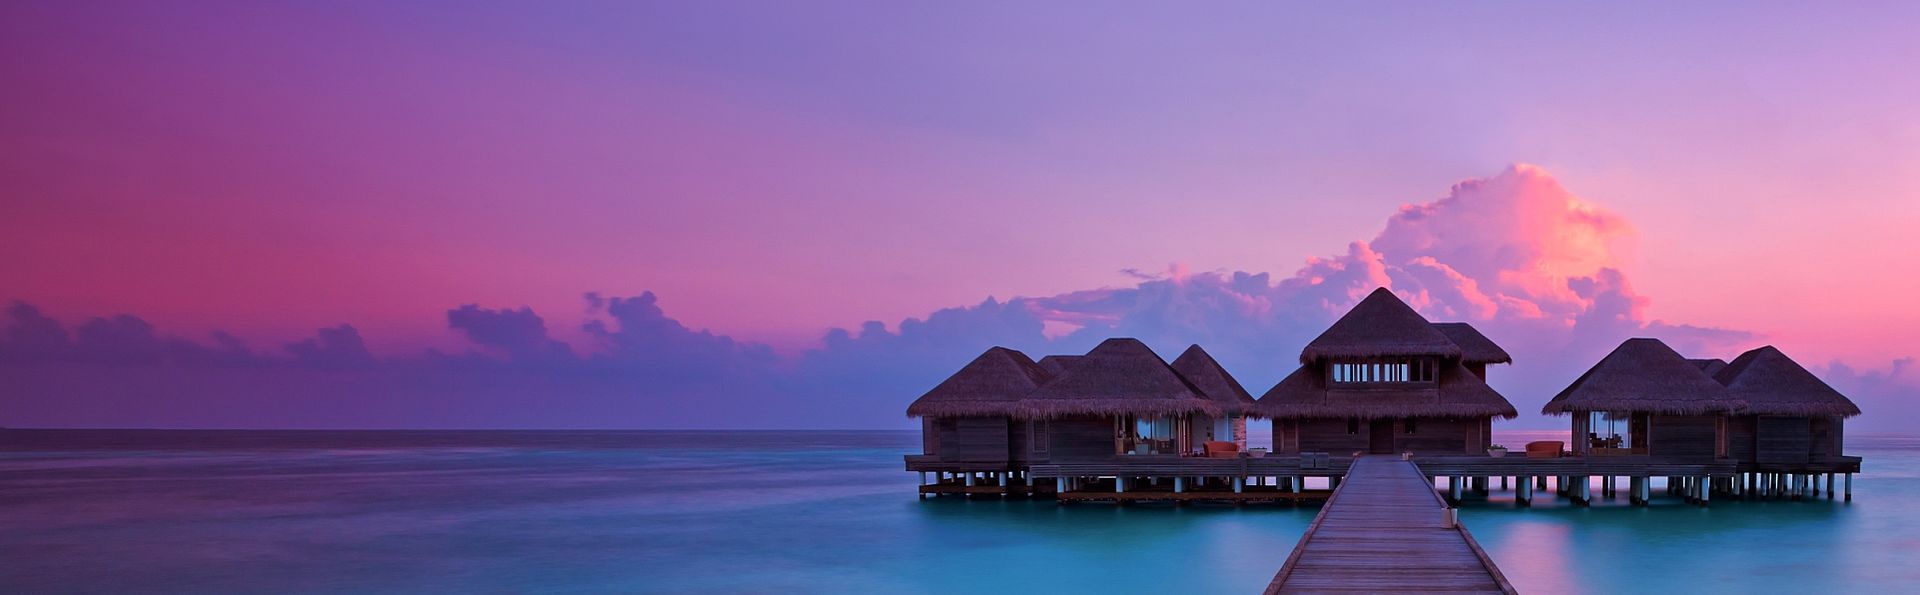 Malediven Overwater Villa